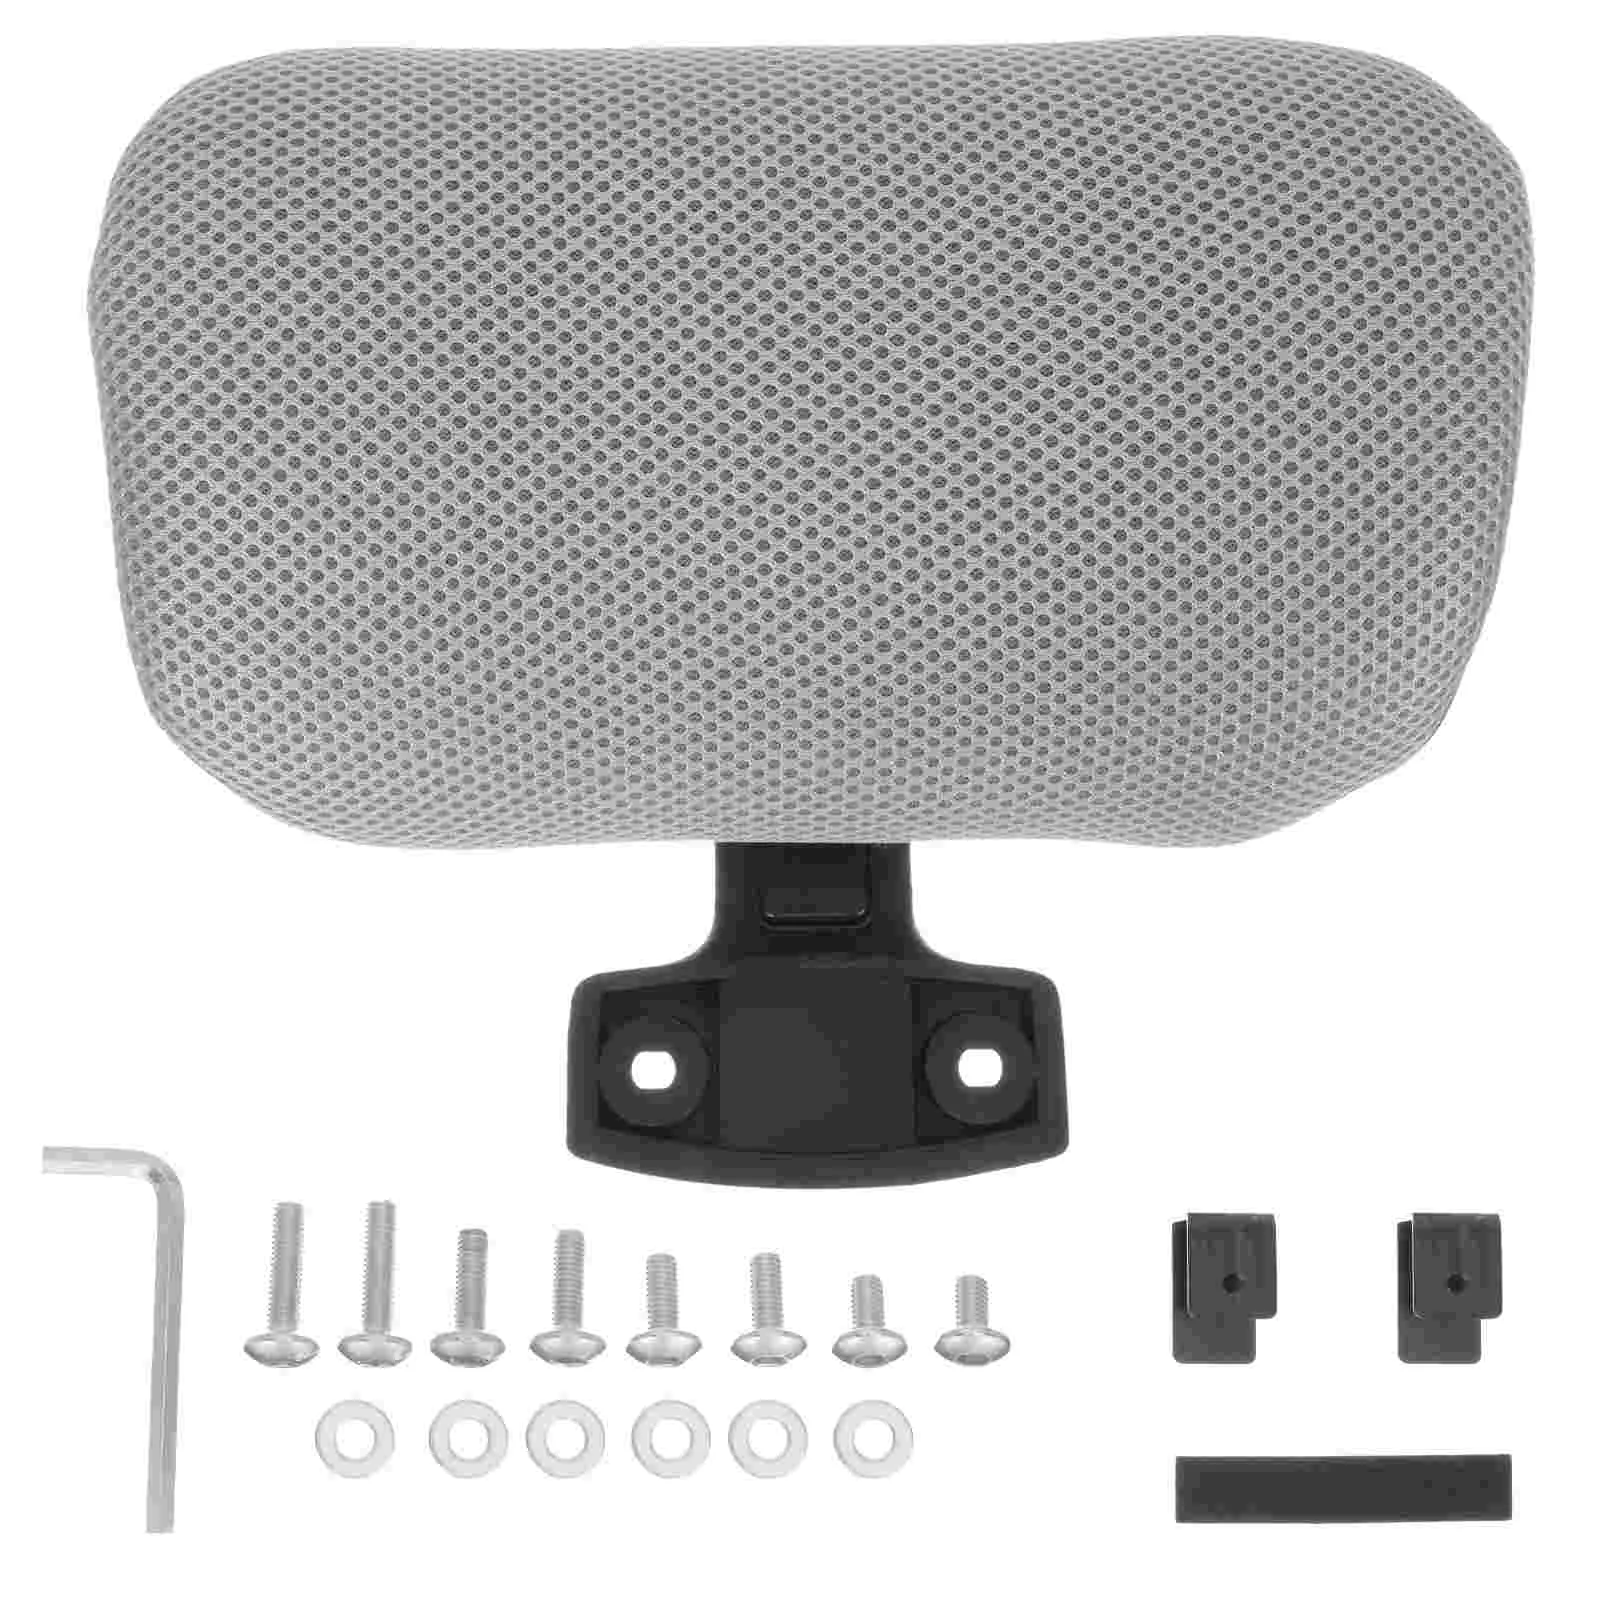 

Veemoon Ergonomic Desk Chair Headrest Attachment Head Support Cushion Elastic Sponge Head Pillow Adjustable Height